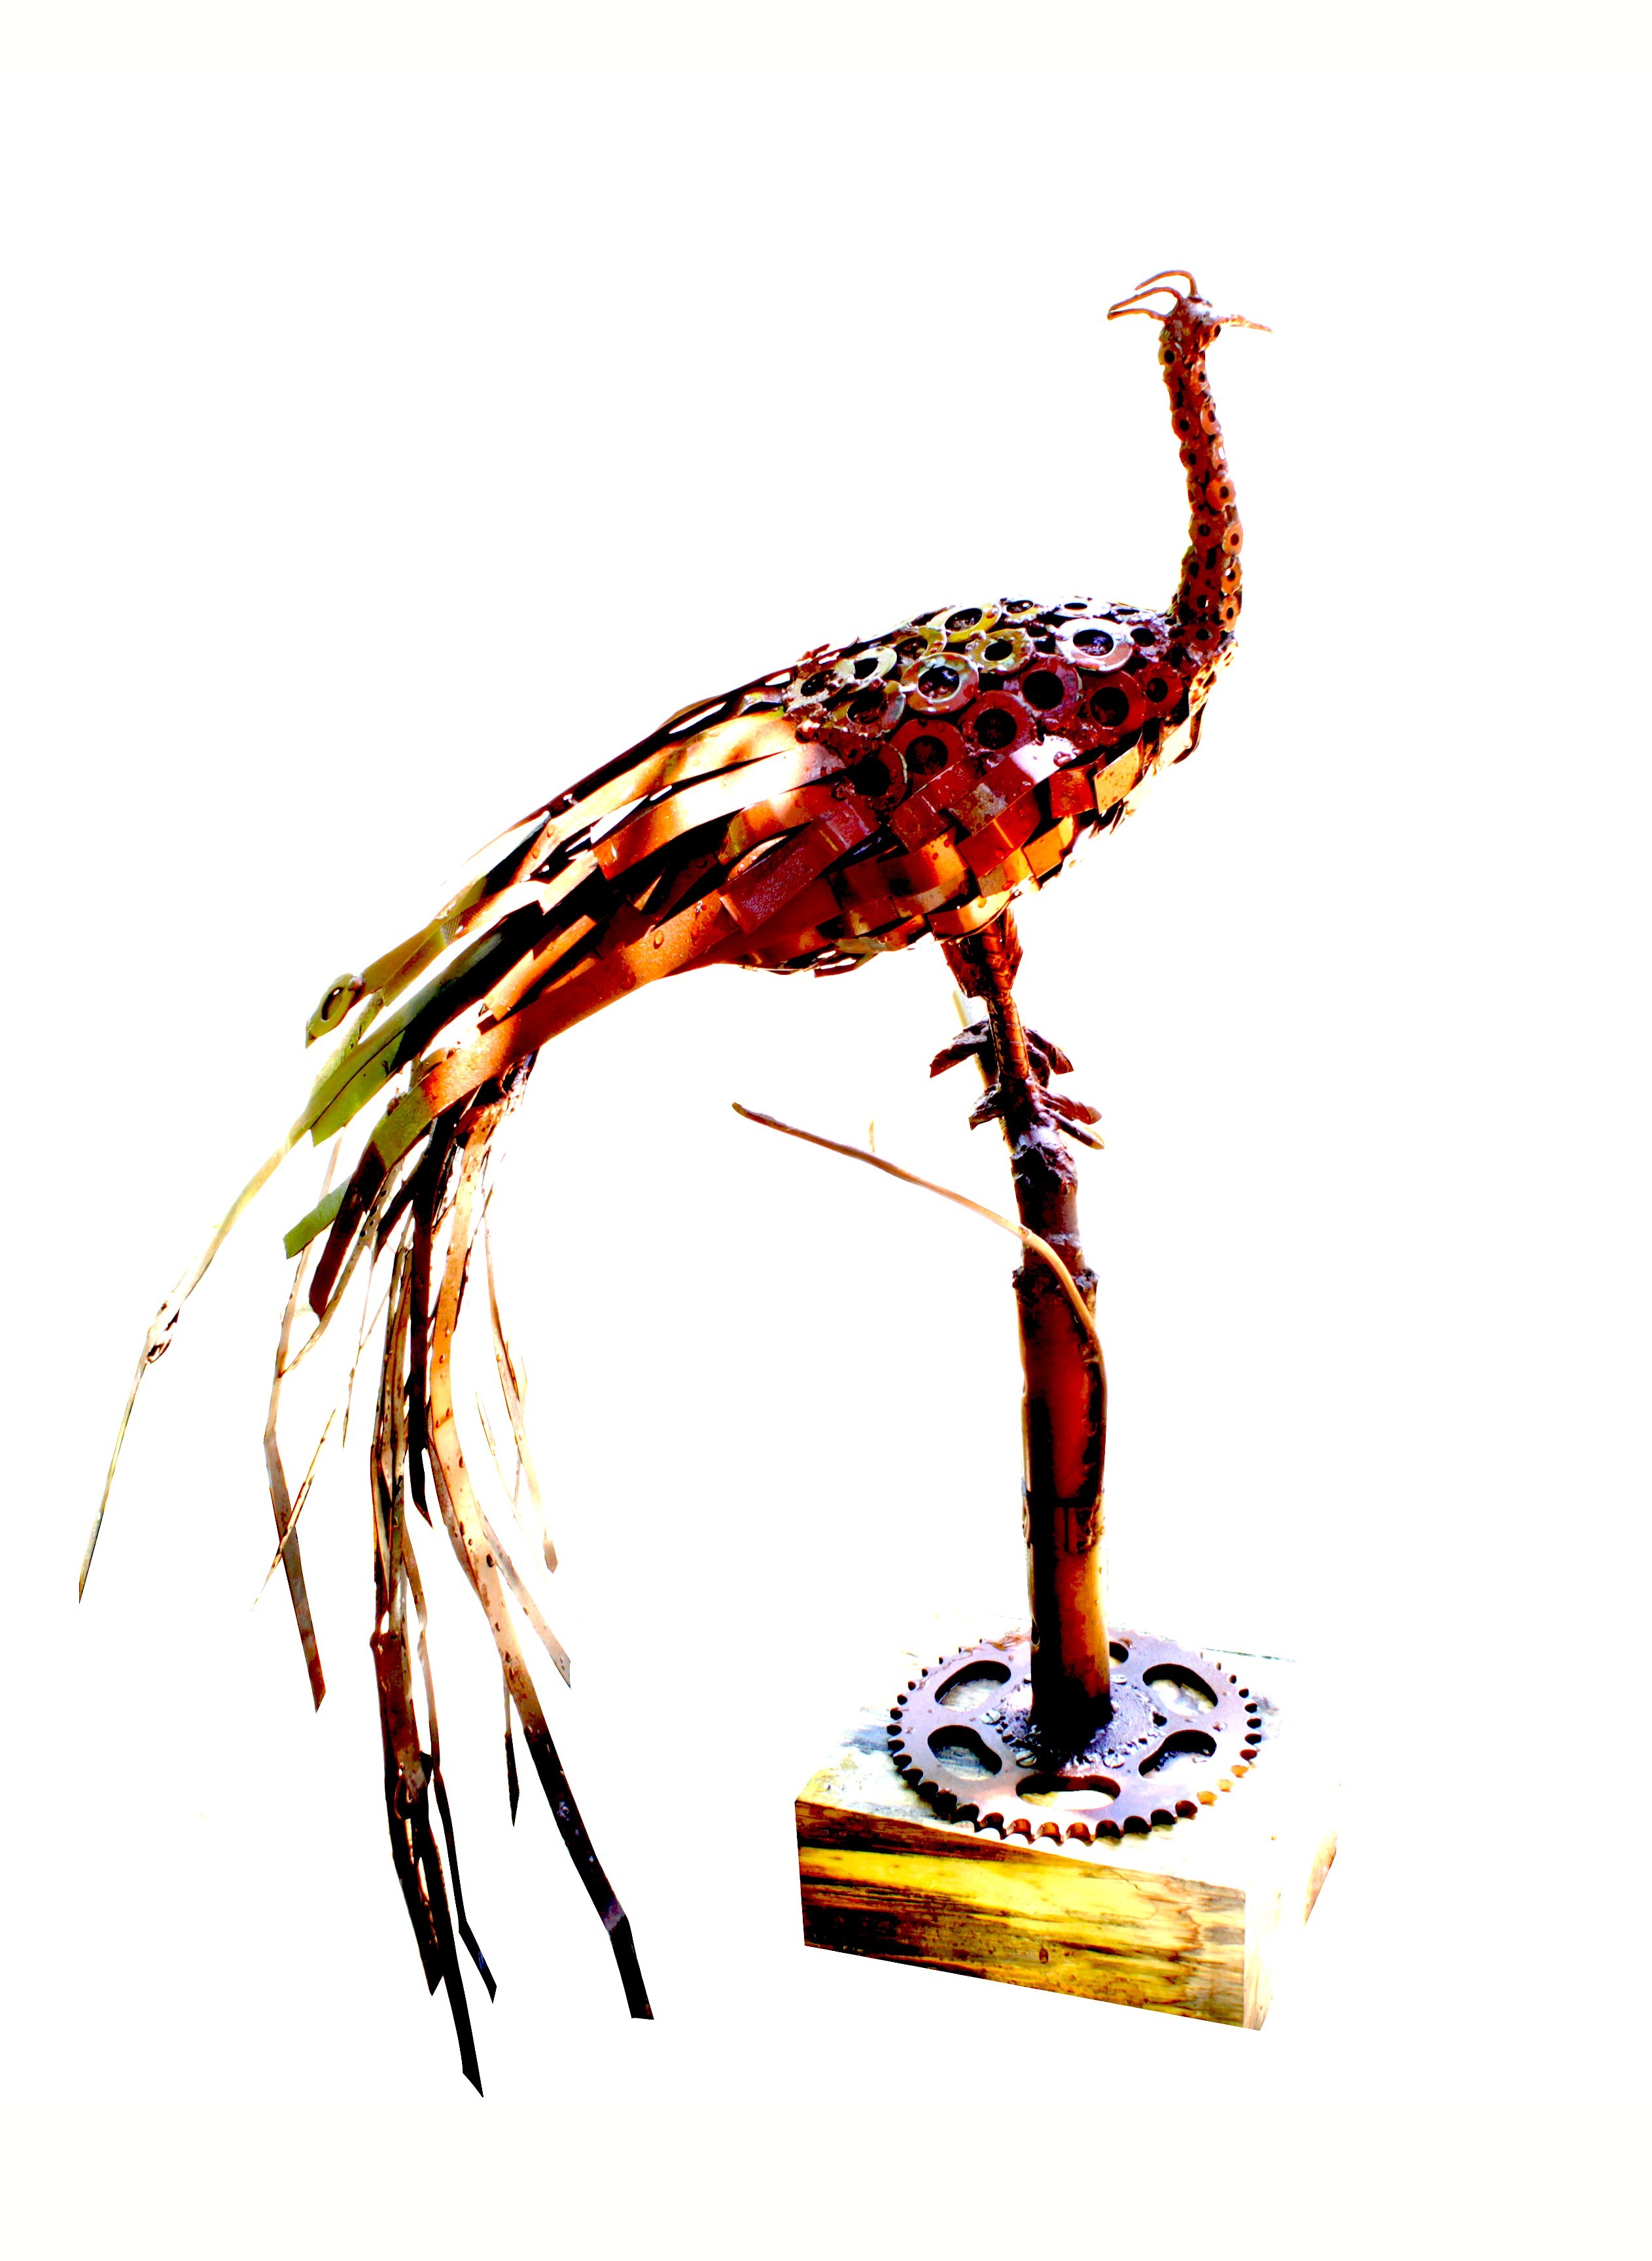 Peacock on the Branch by RANGA BANDARA